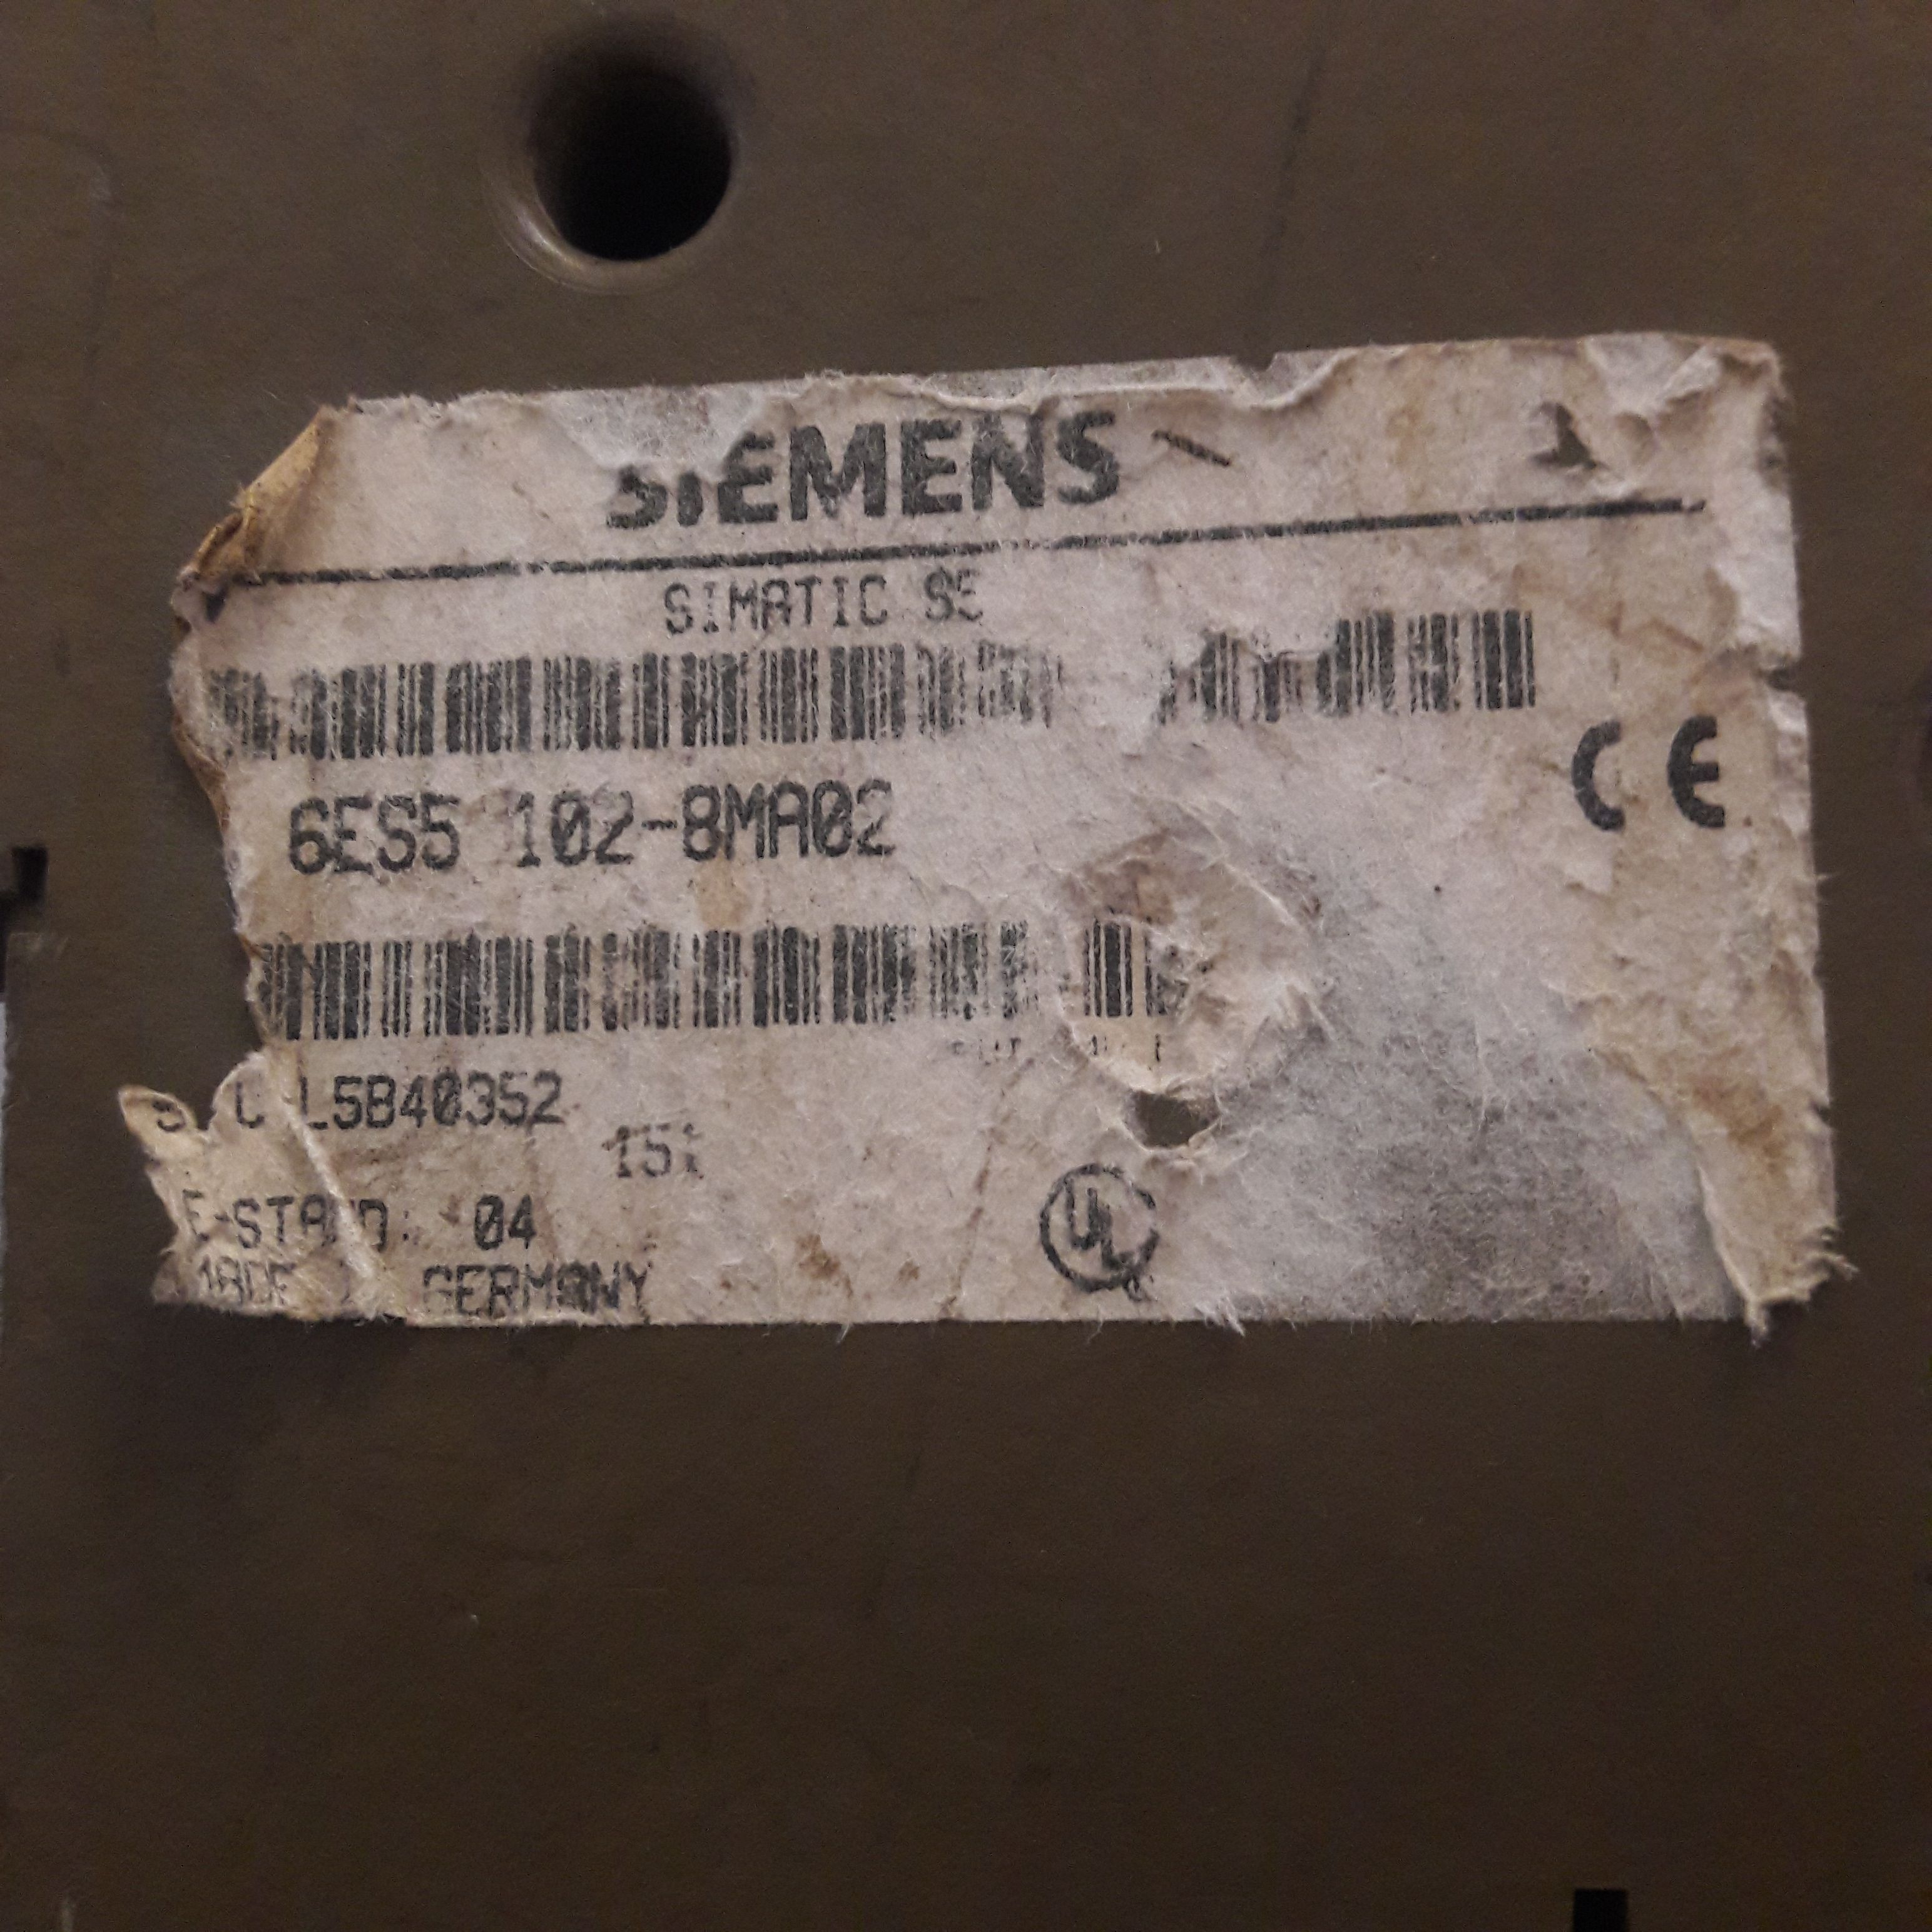 SIEMENS SIMATIC S7 6ES5 102-8MA02